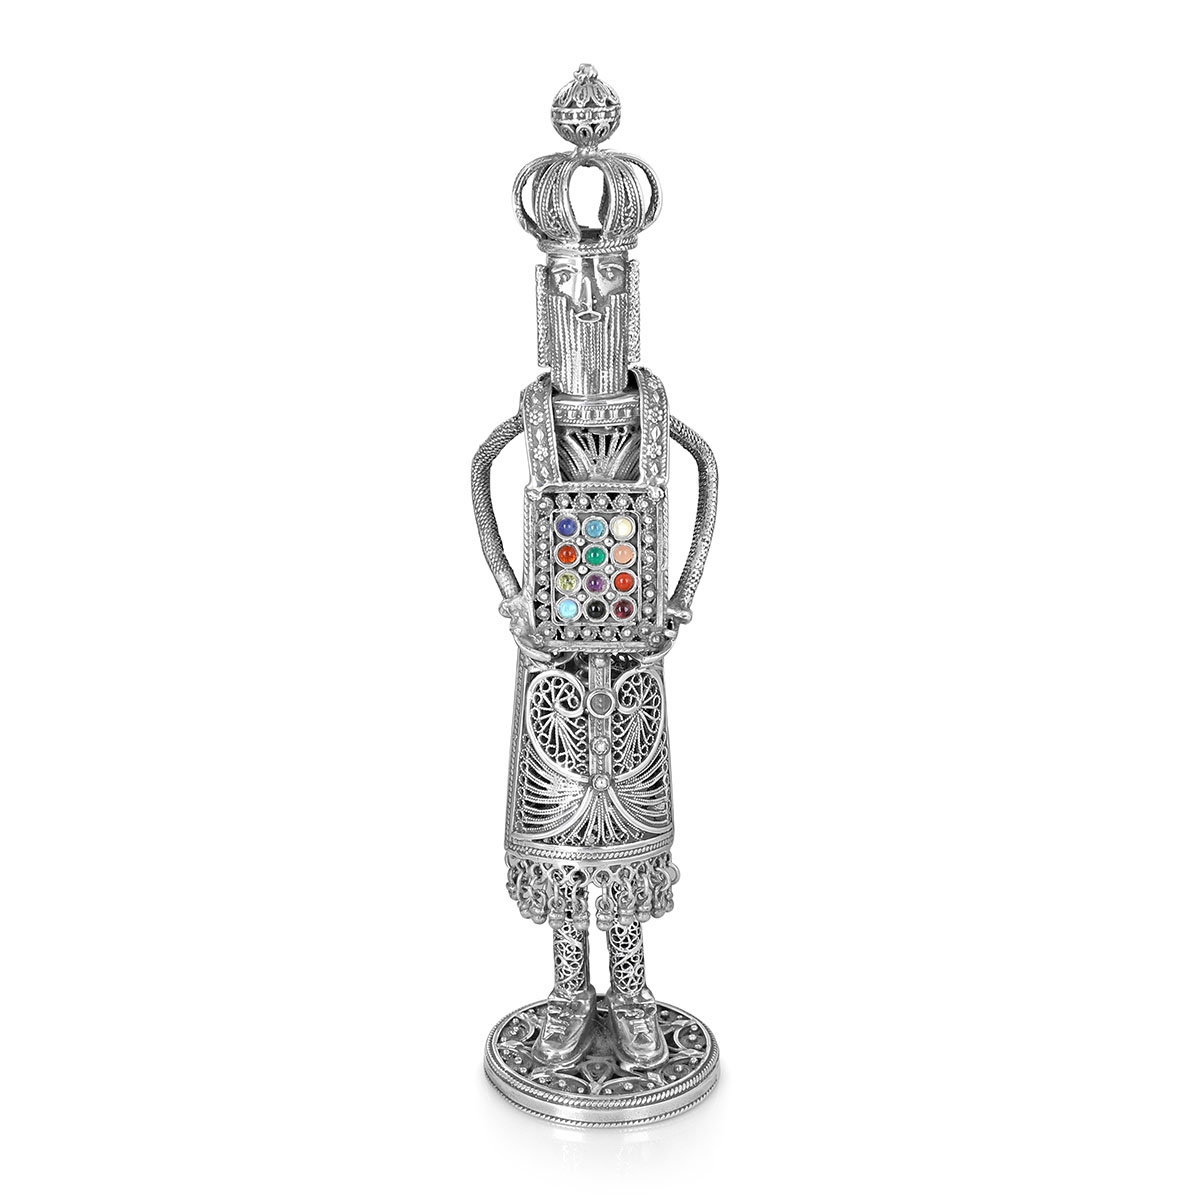 Traditional Yemenite Art Handcrafted Sterling Silver Kohen Gadol (High Priest) Figurine With Filigree Design - 1